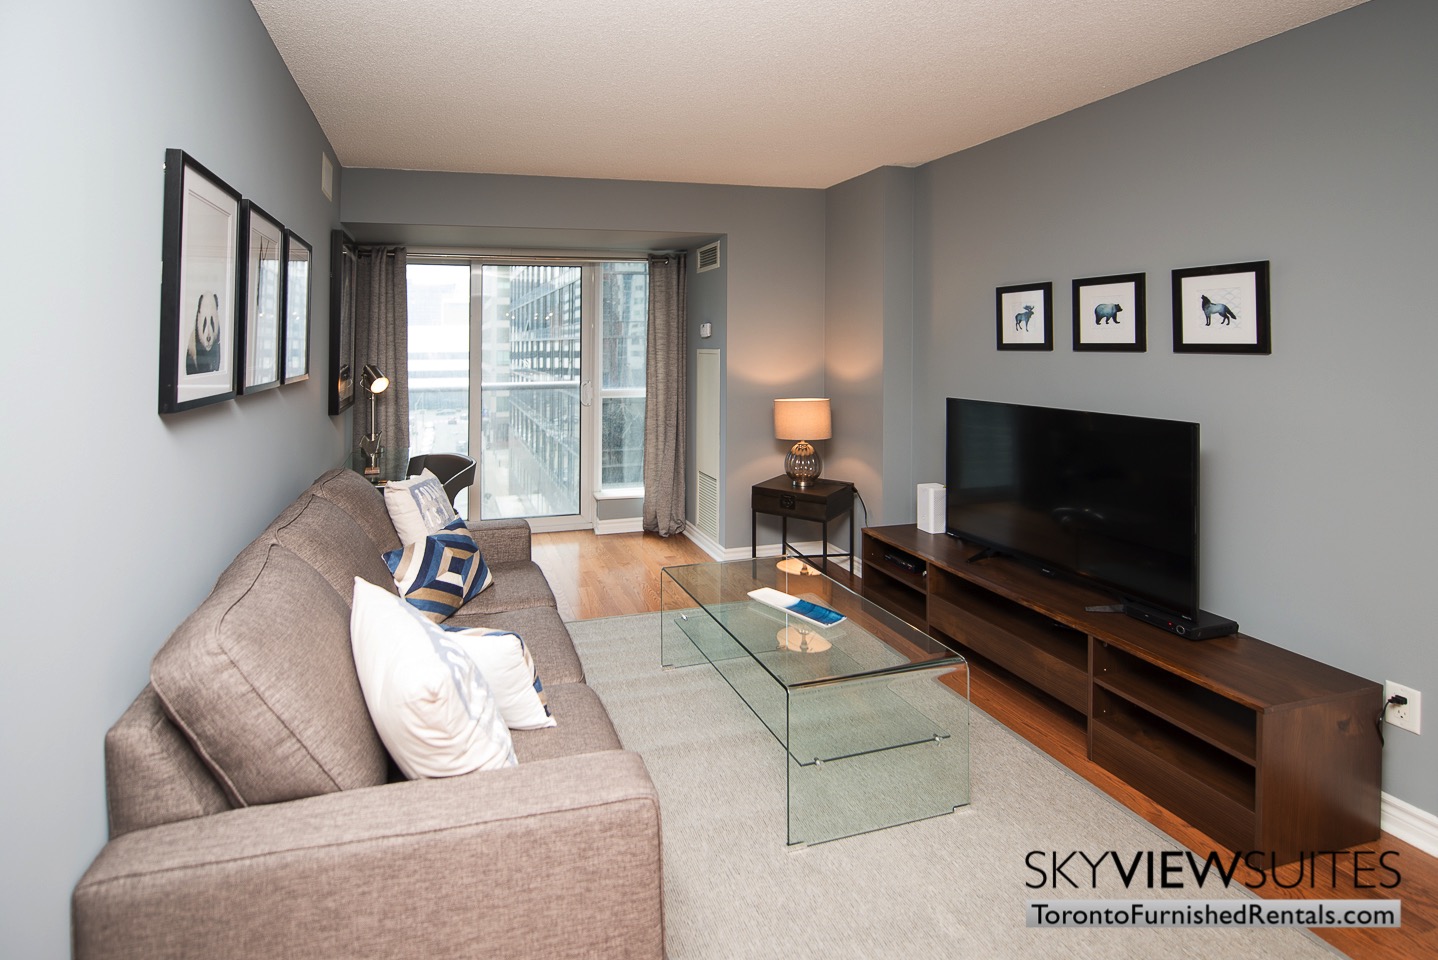 Wellington and Blue Jays Way executive rentals toronto living room pillows and tv set